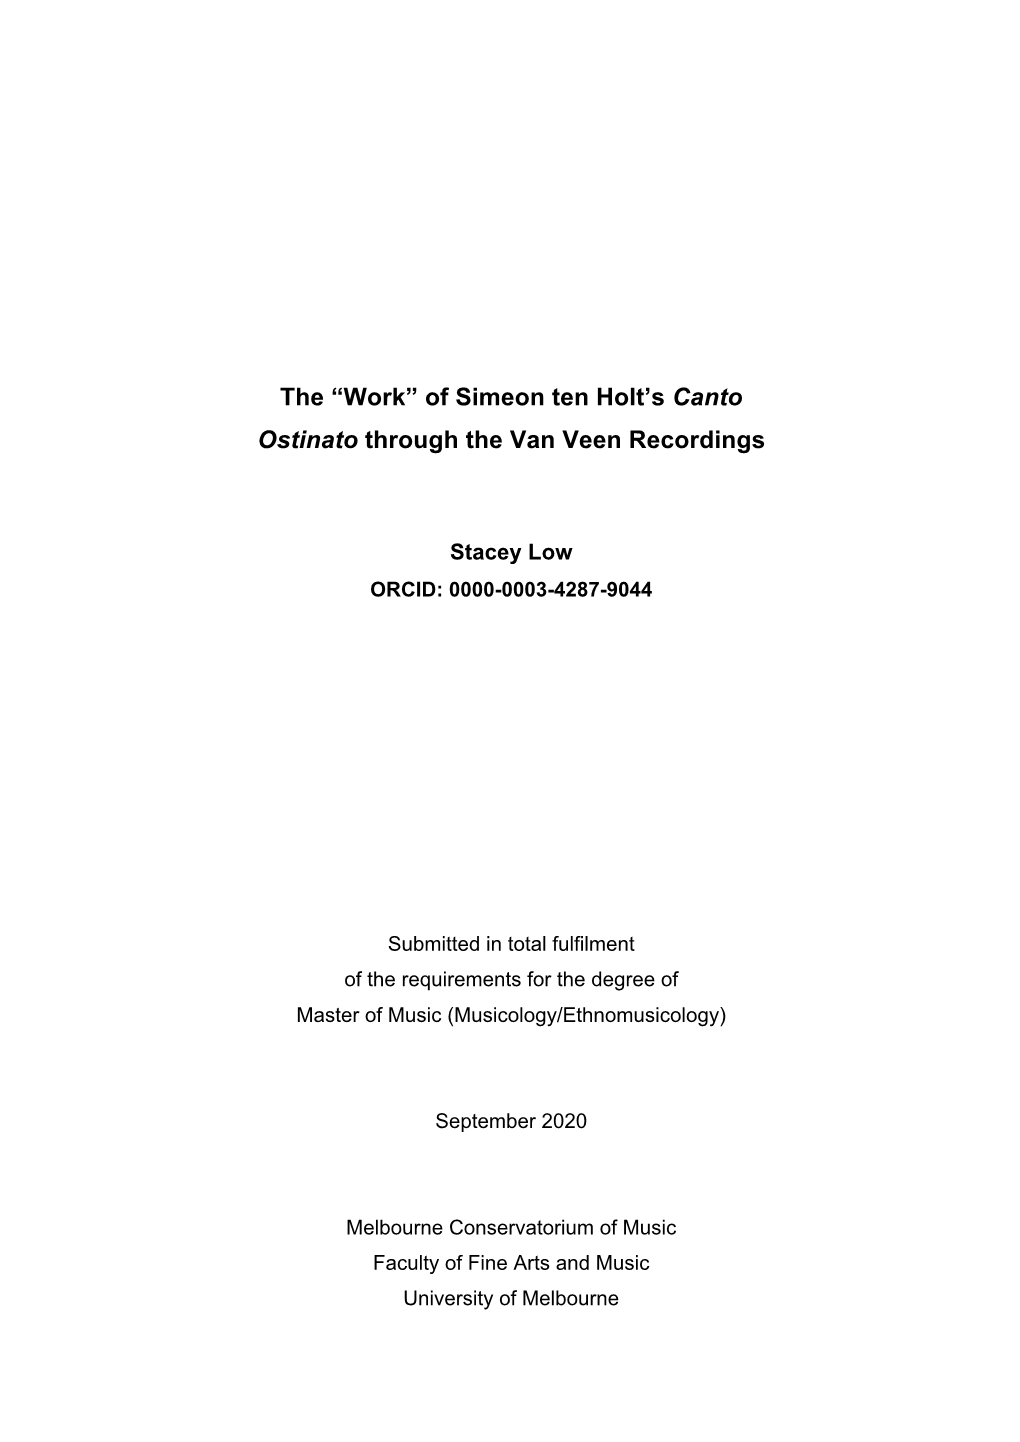 The “Work” of Simeon Ten Holt's Canto Ostinato Through the Van Veen